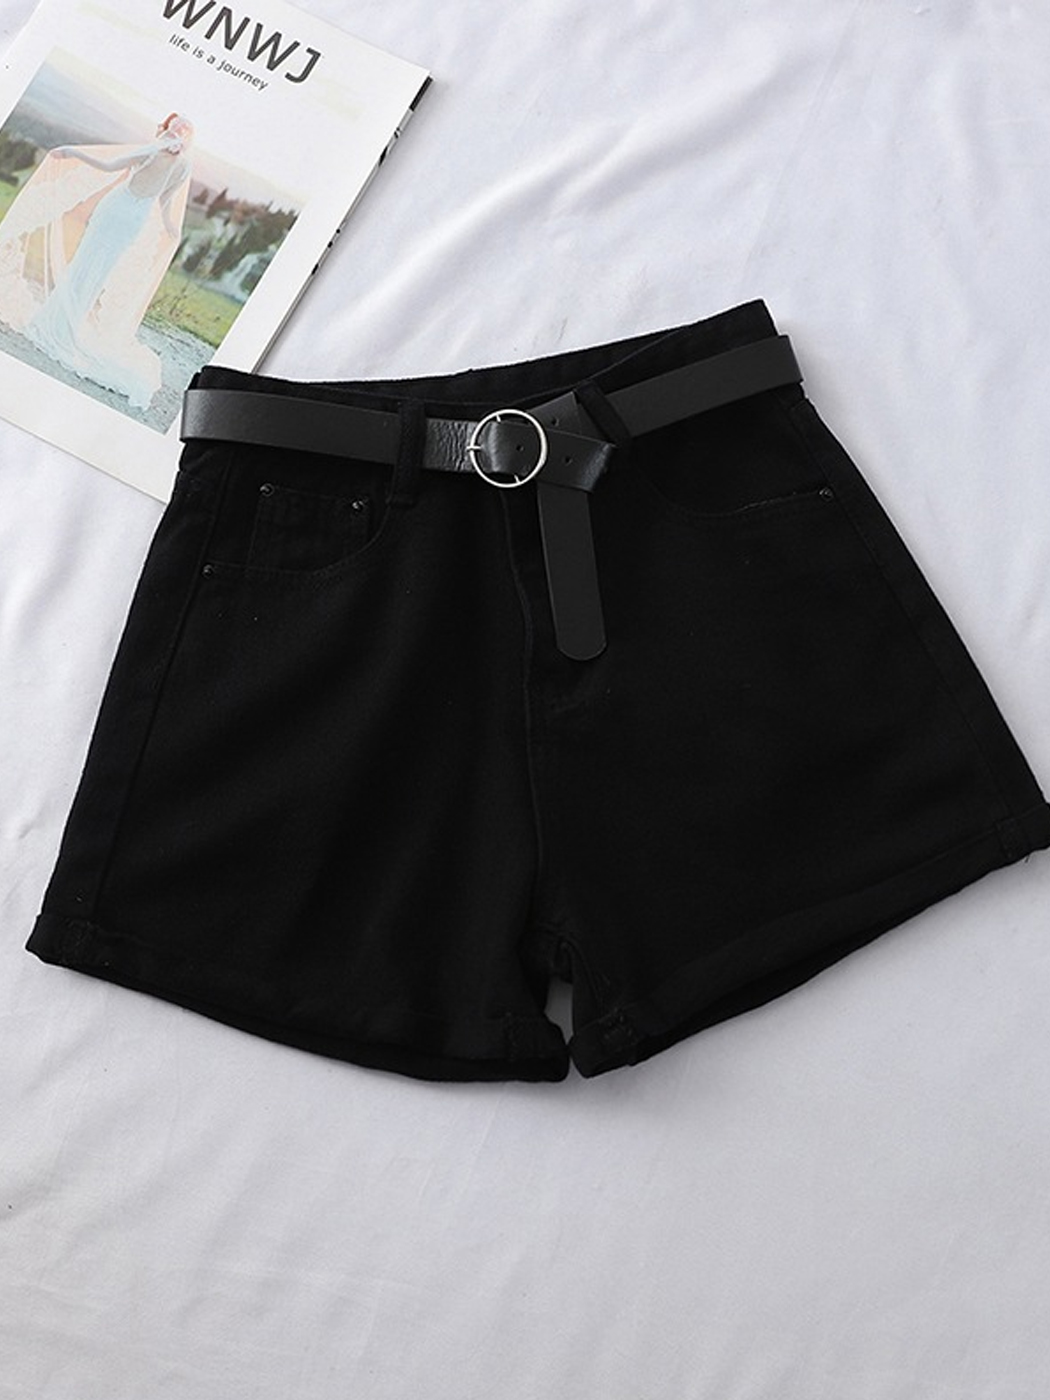 Retro Distressed Pocket Denim Shorts / [blueesa] /